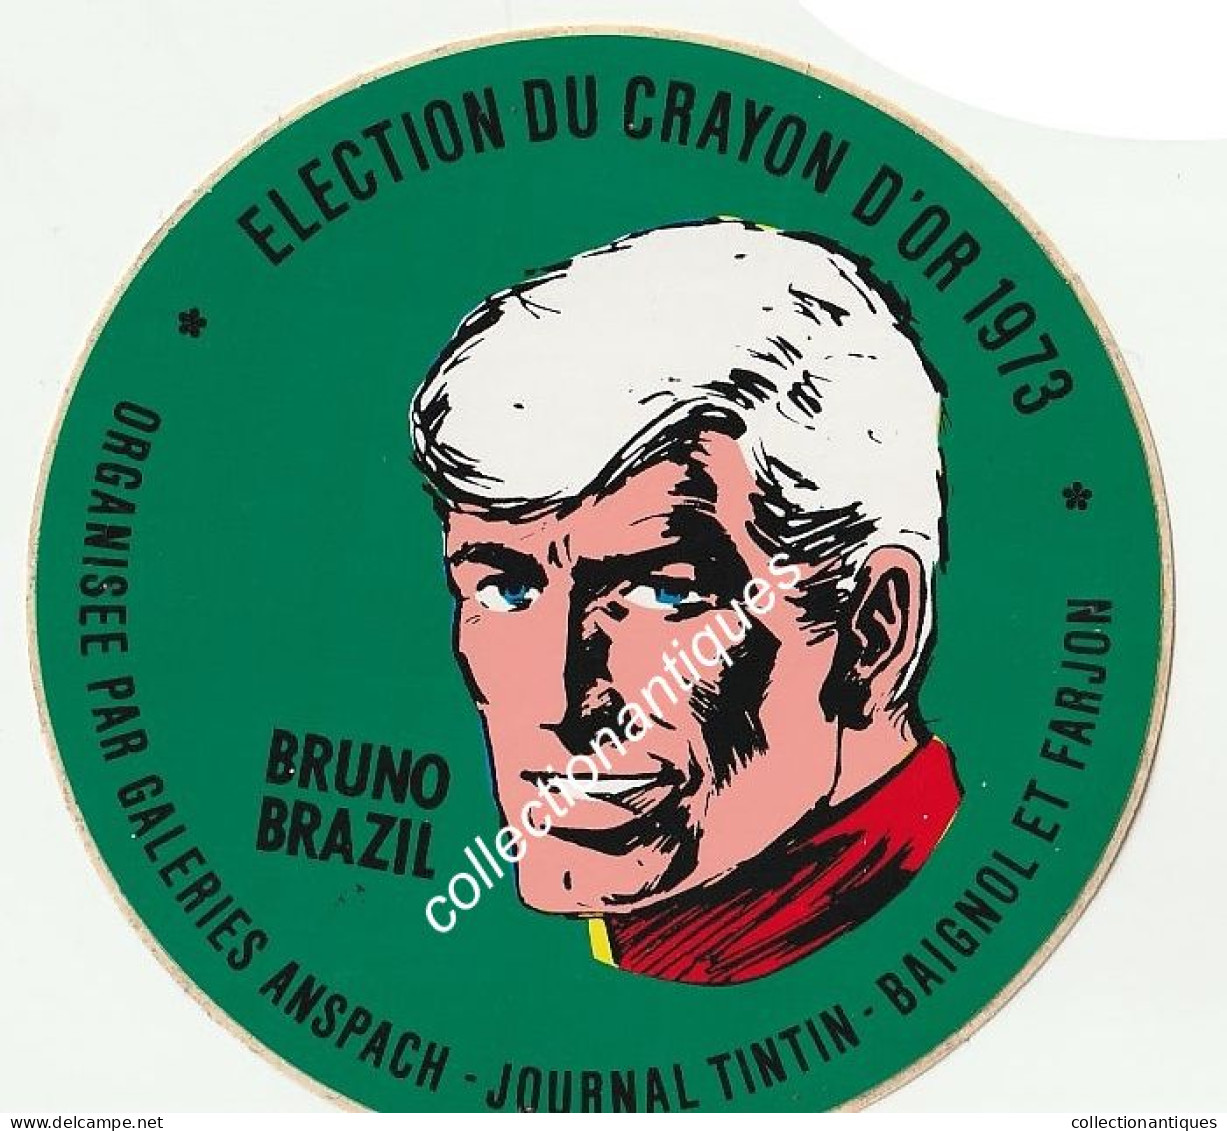 Bruno Brazil RARE Sticker Autocollant Election Du Crayon D'Or 1973 Galeries Anspach Journal Tintin Baignol Et Farjon - Stickers